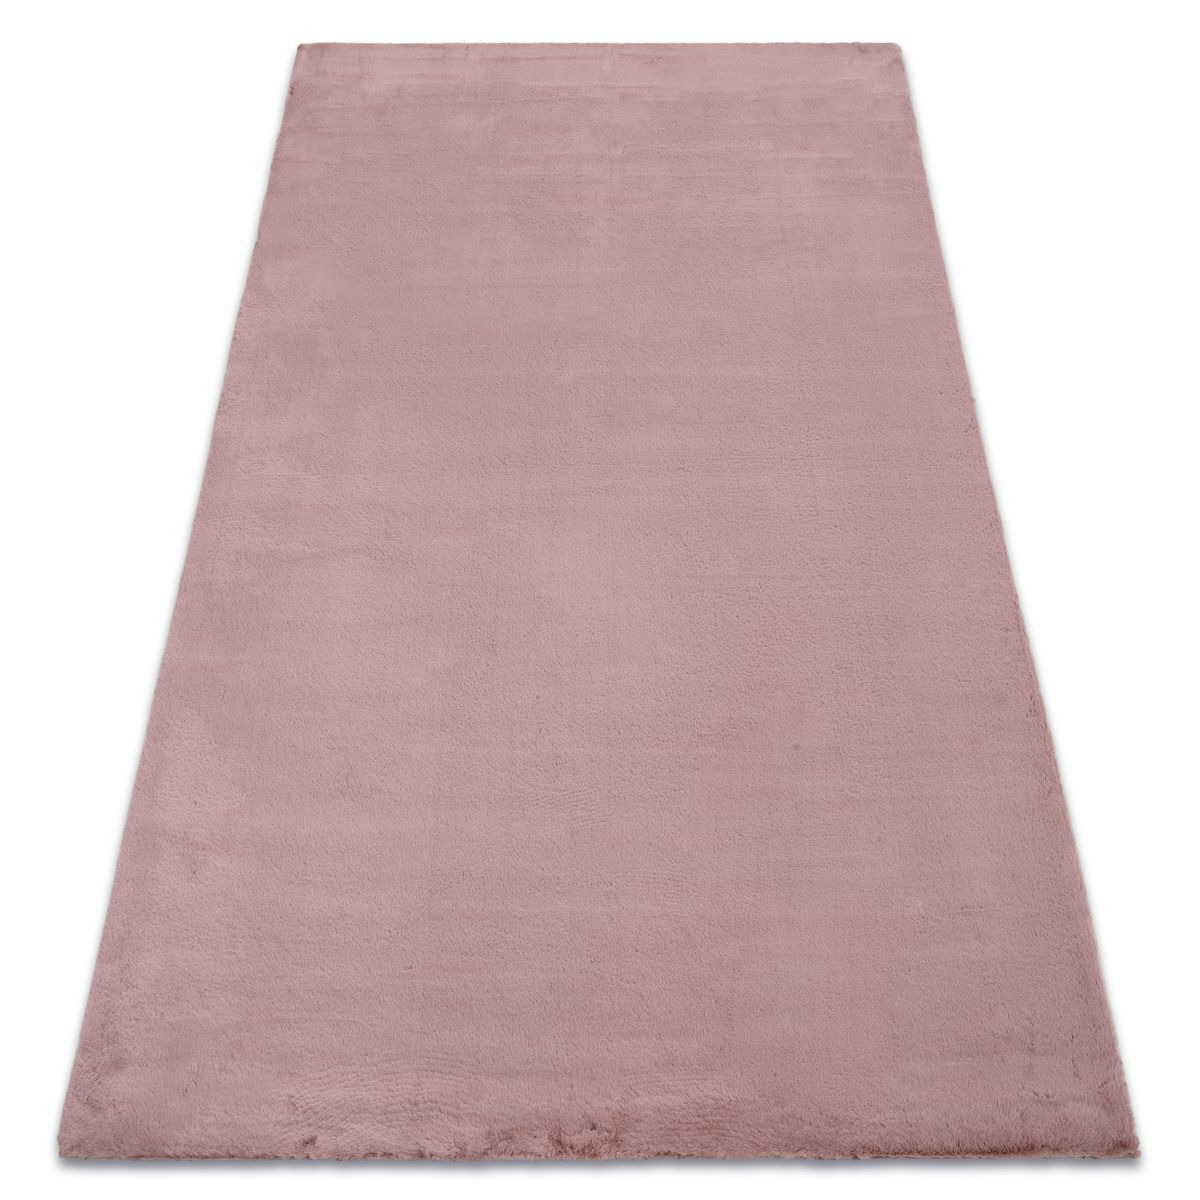 Taol Single Coloured Rug Pink, 180x270 cm - image 1